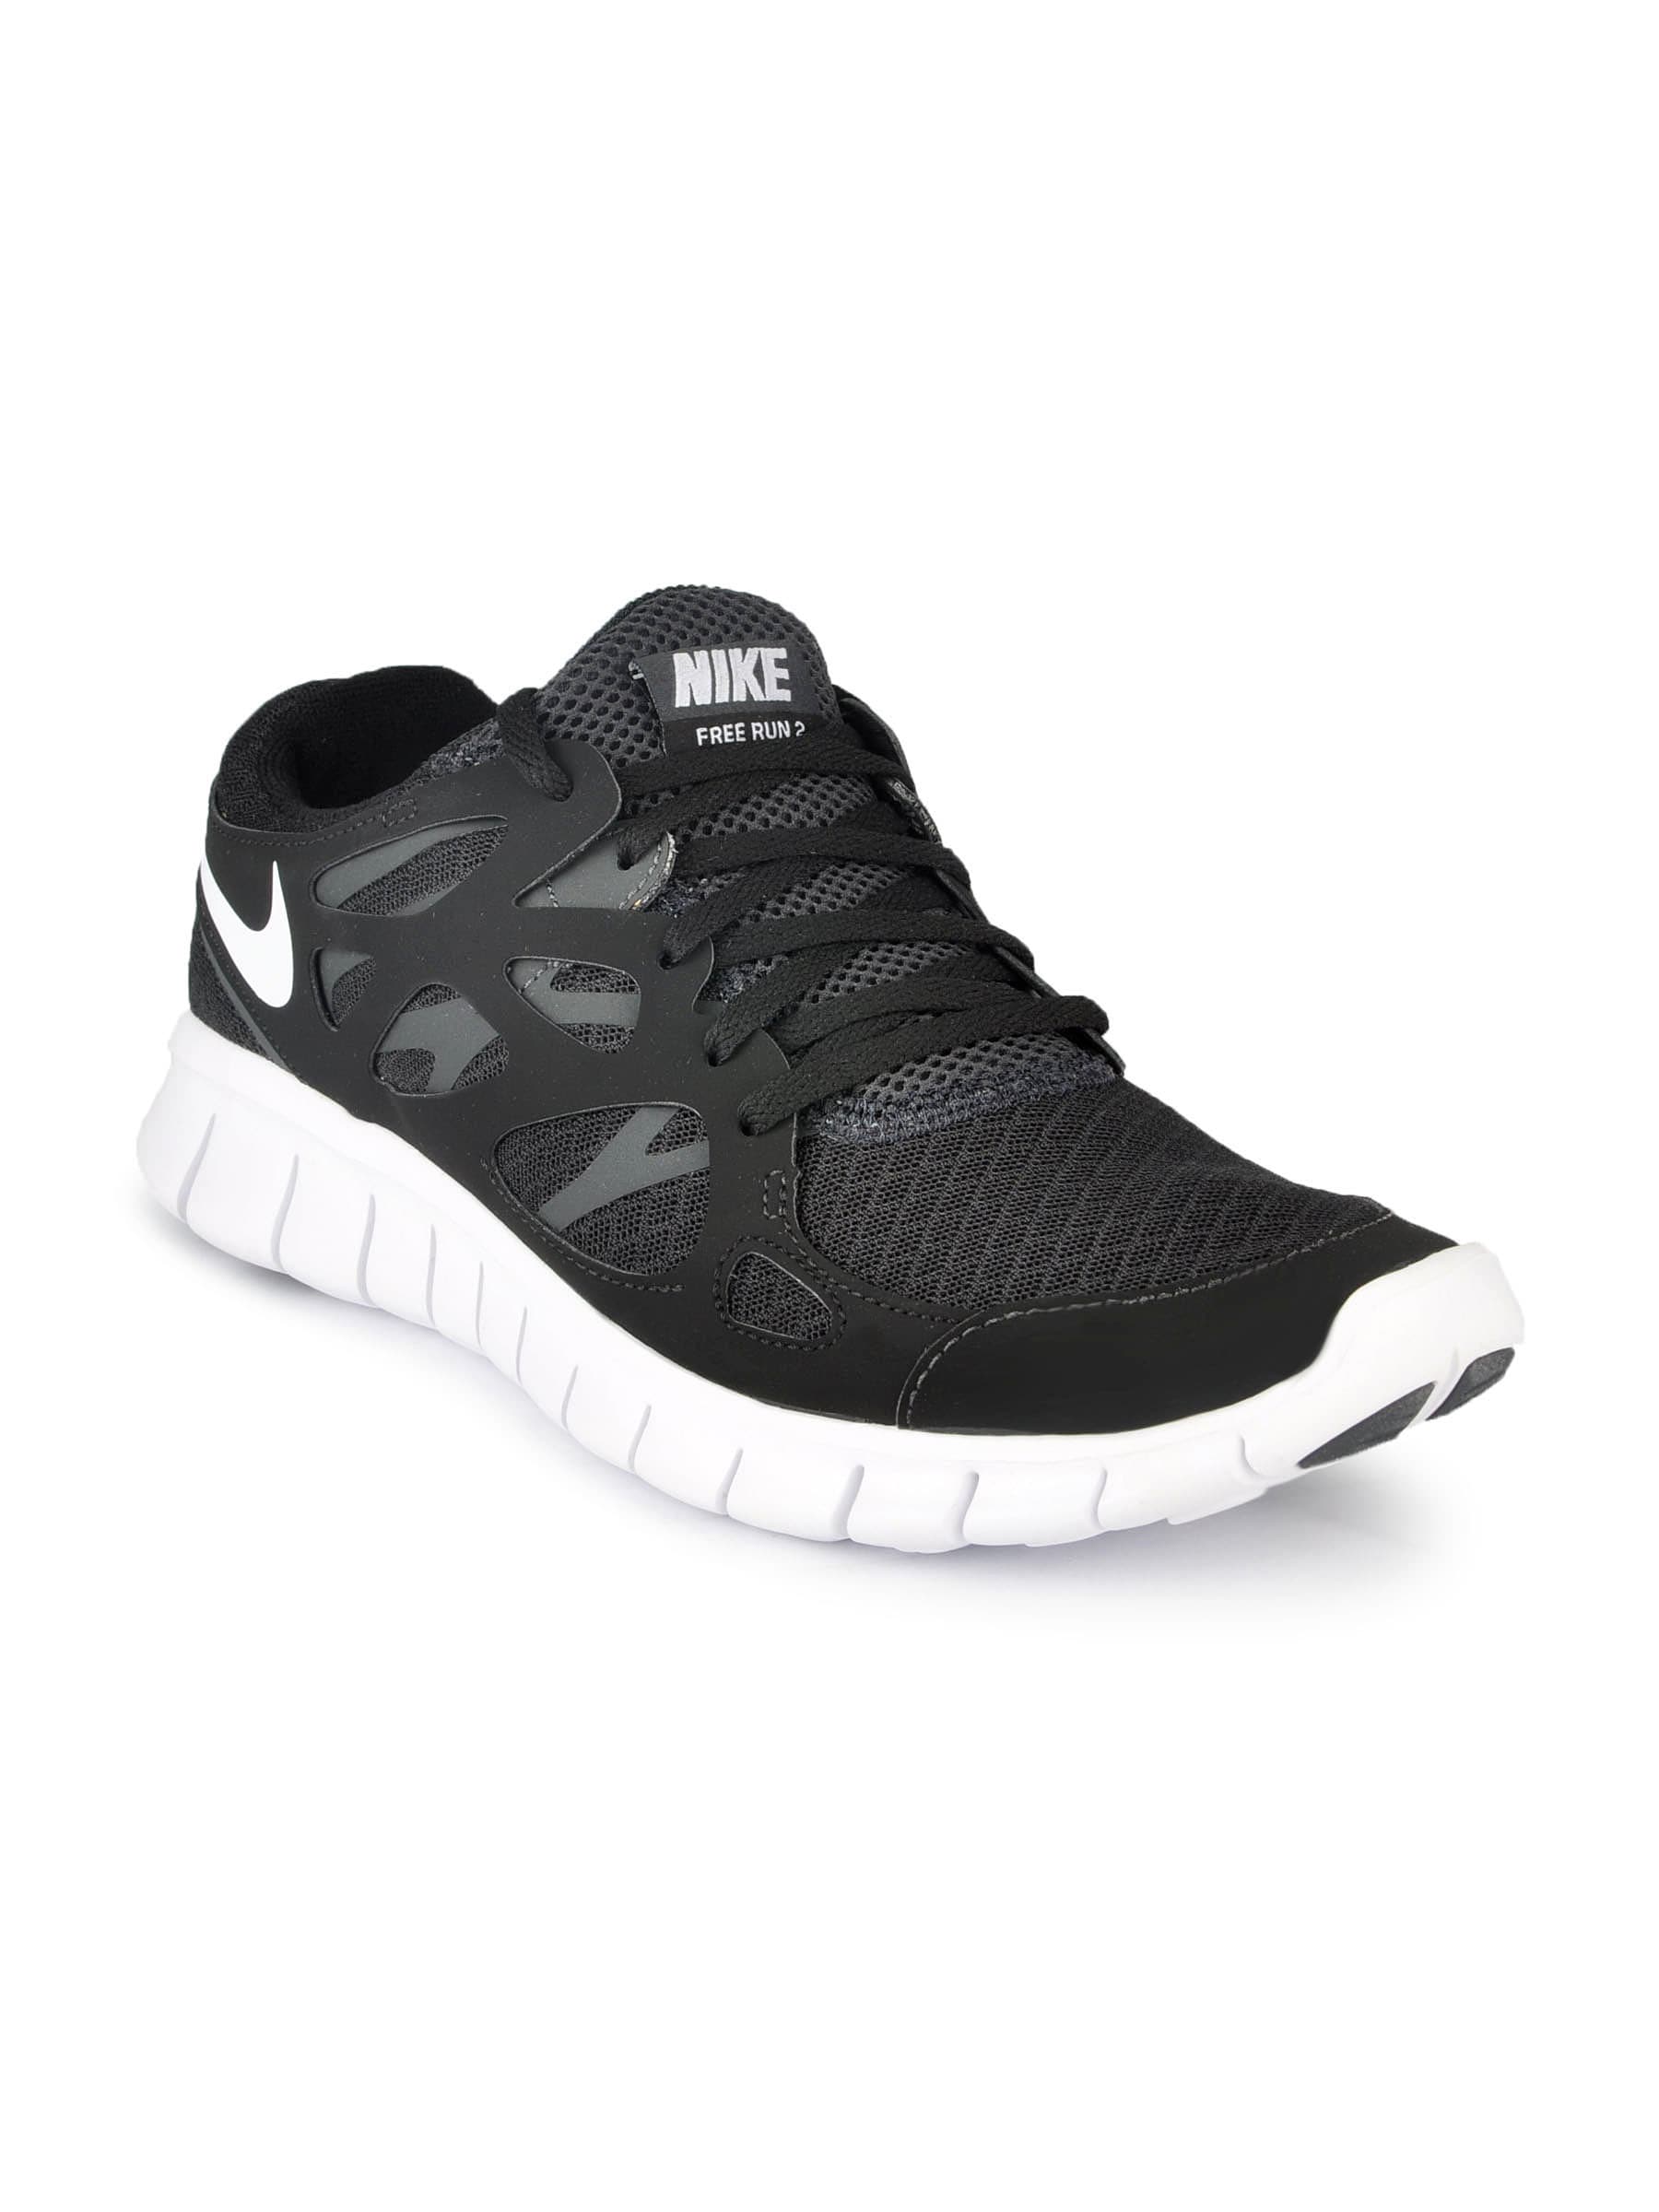 Nike Men Free Run+ 2 Black Sports Shoes